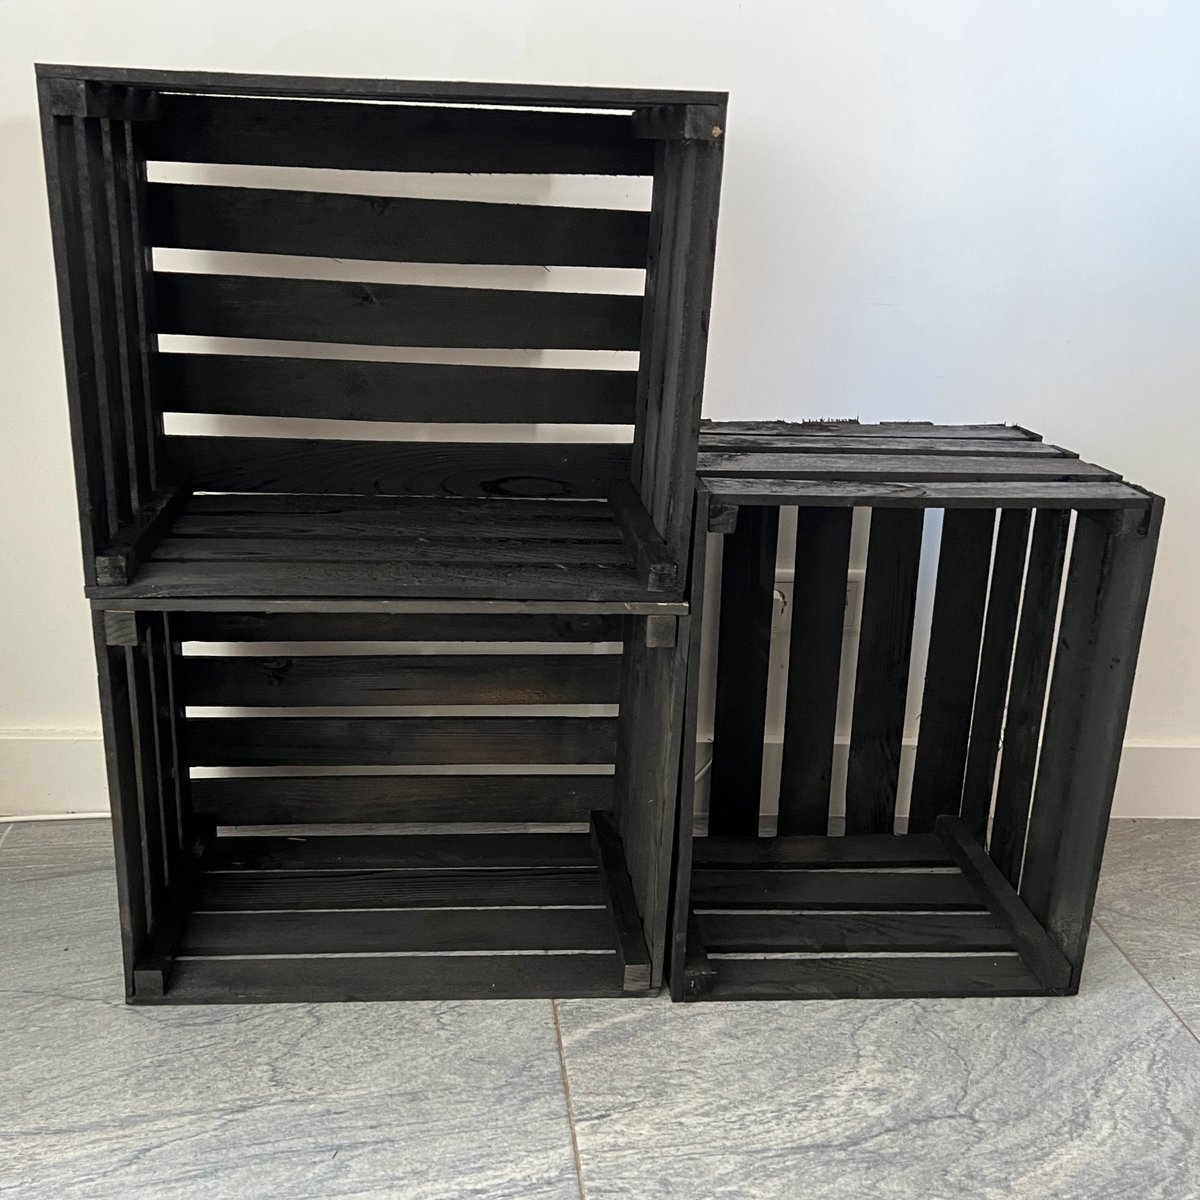 AMISHOUT - 3x kist set - 3 zwarte fruitkisten 50x40x30 cm